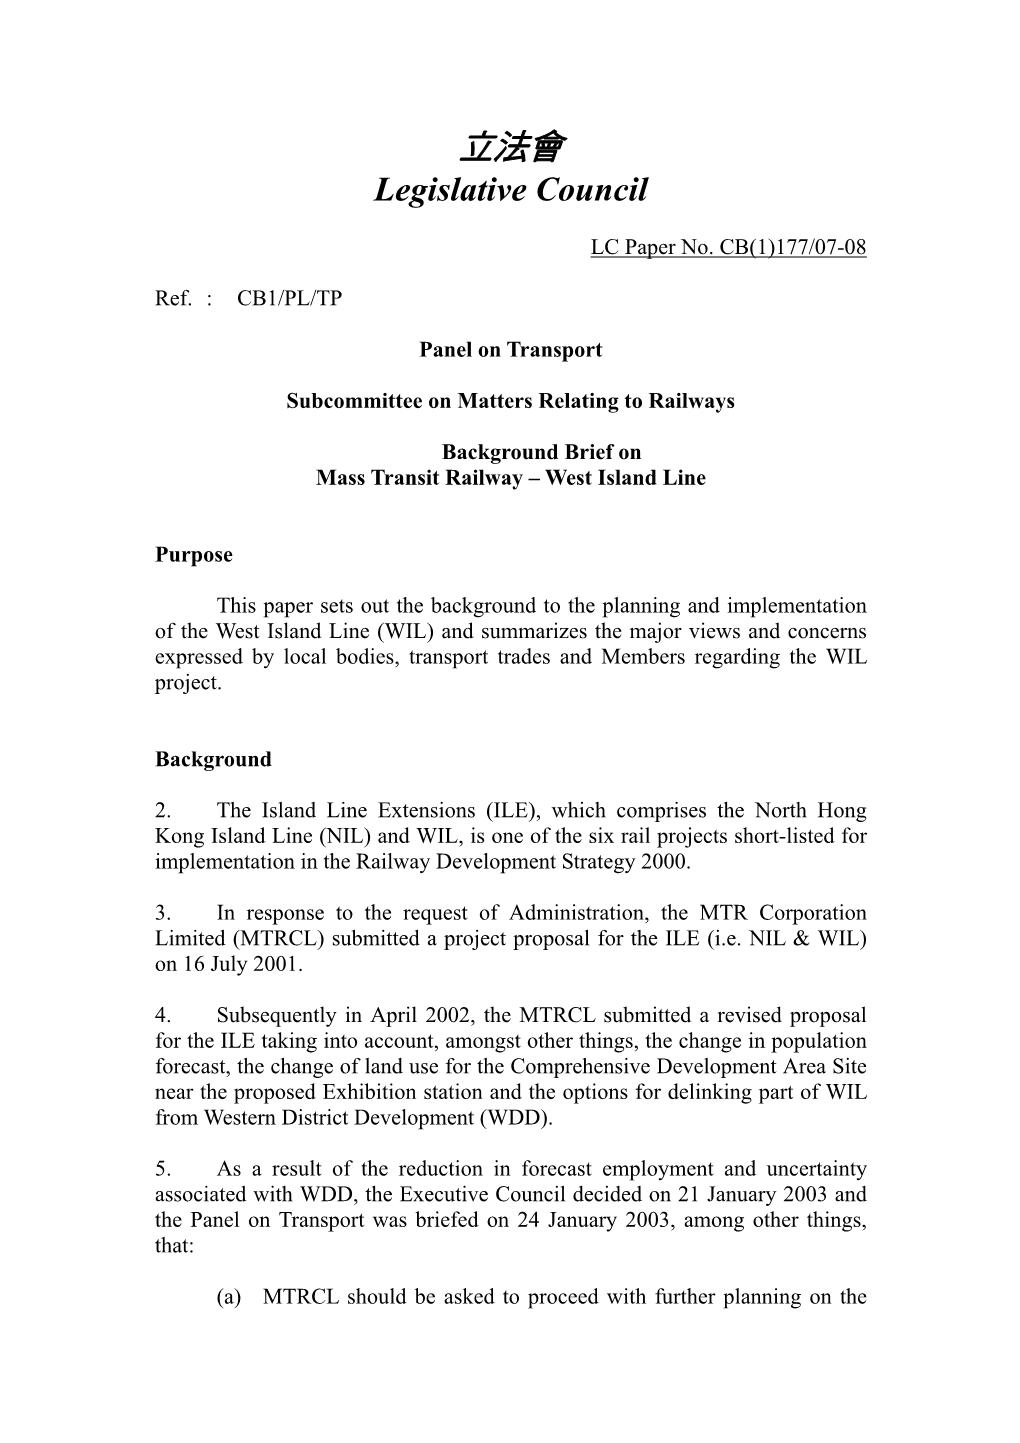 Paper on West Island Line Prepared by the Legislative Council Secretariat